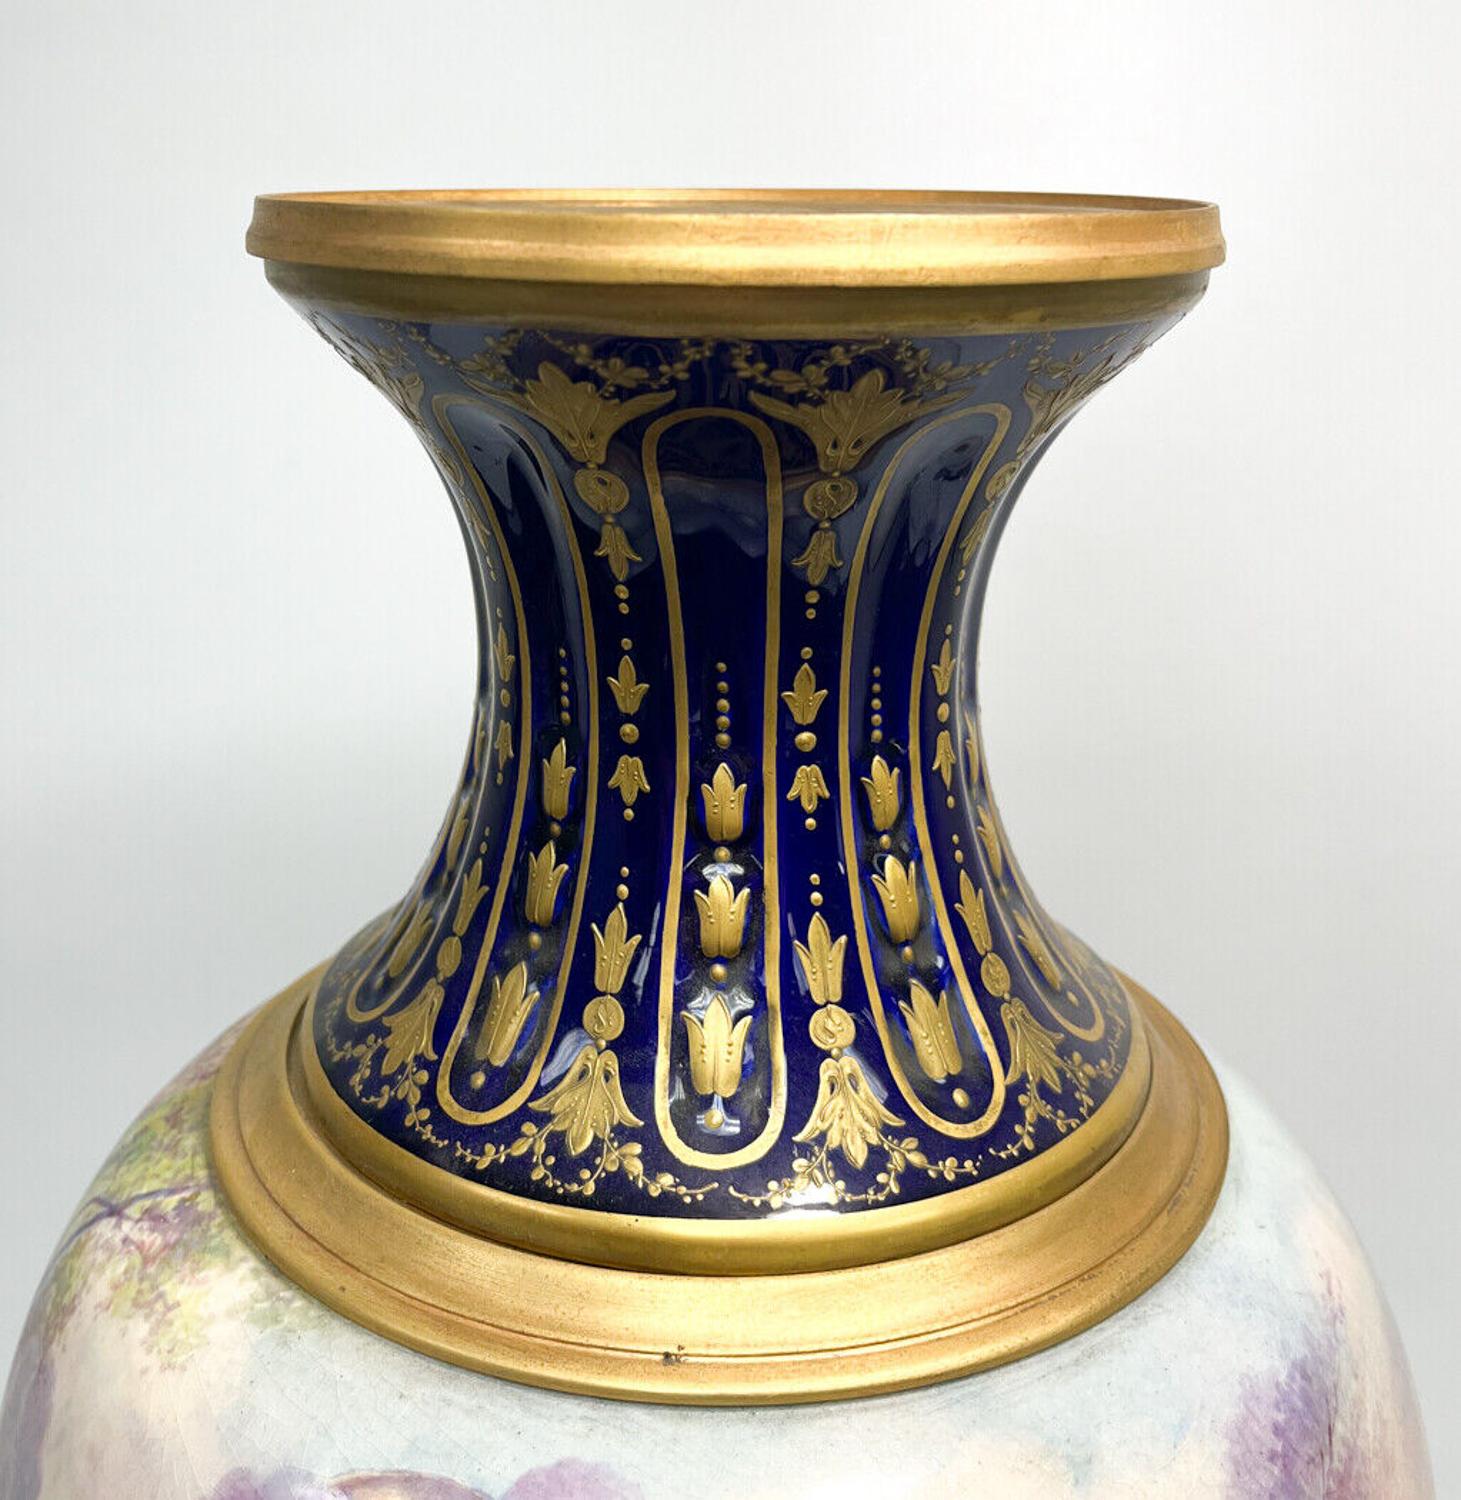  Sevres France Porcelain Large Decorative Urn, Late 19th Century  For Sale 7